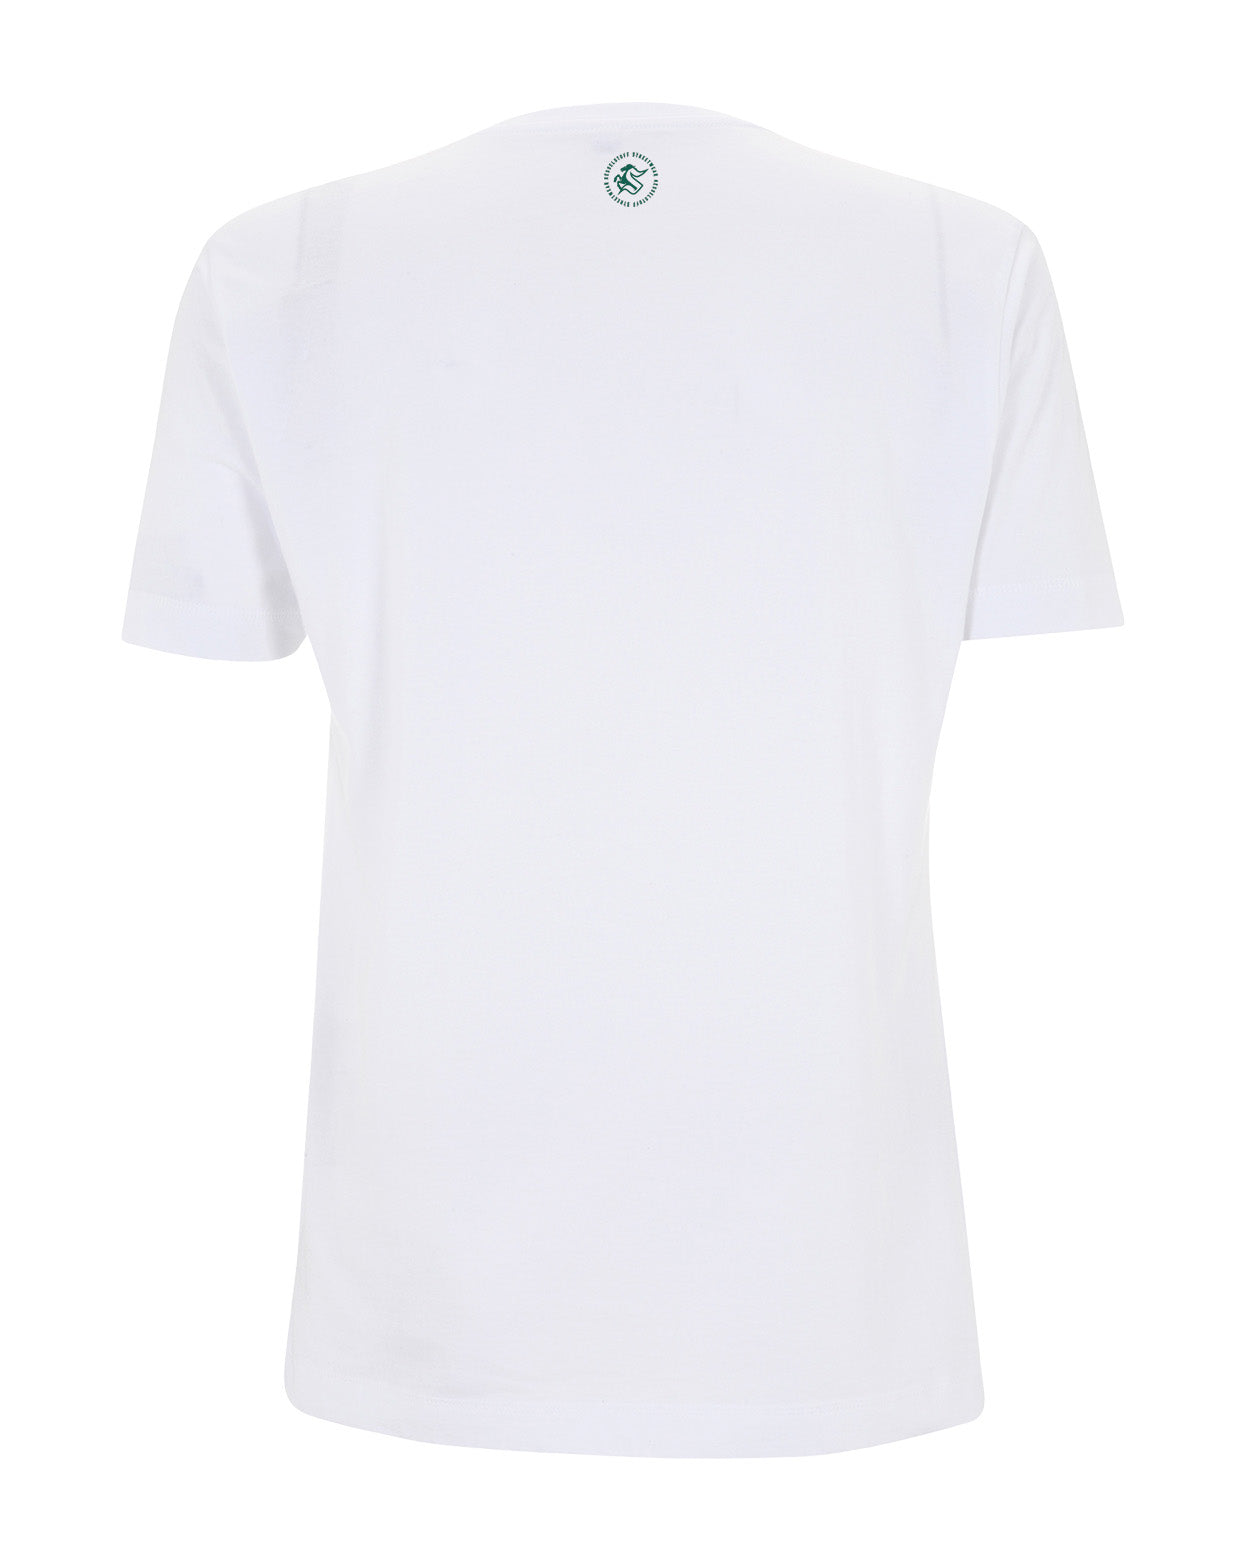 07elf Grün- Shirt - Weiß